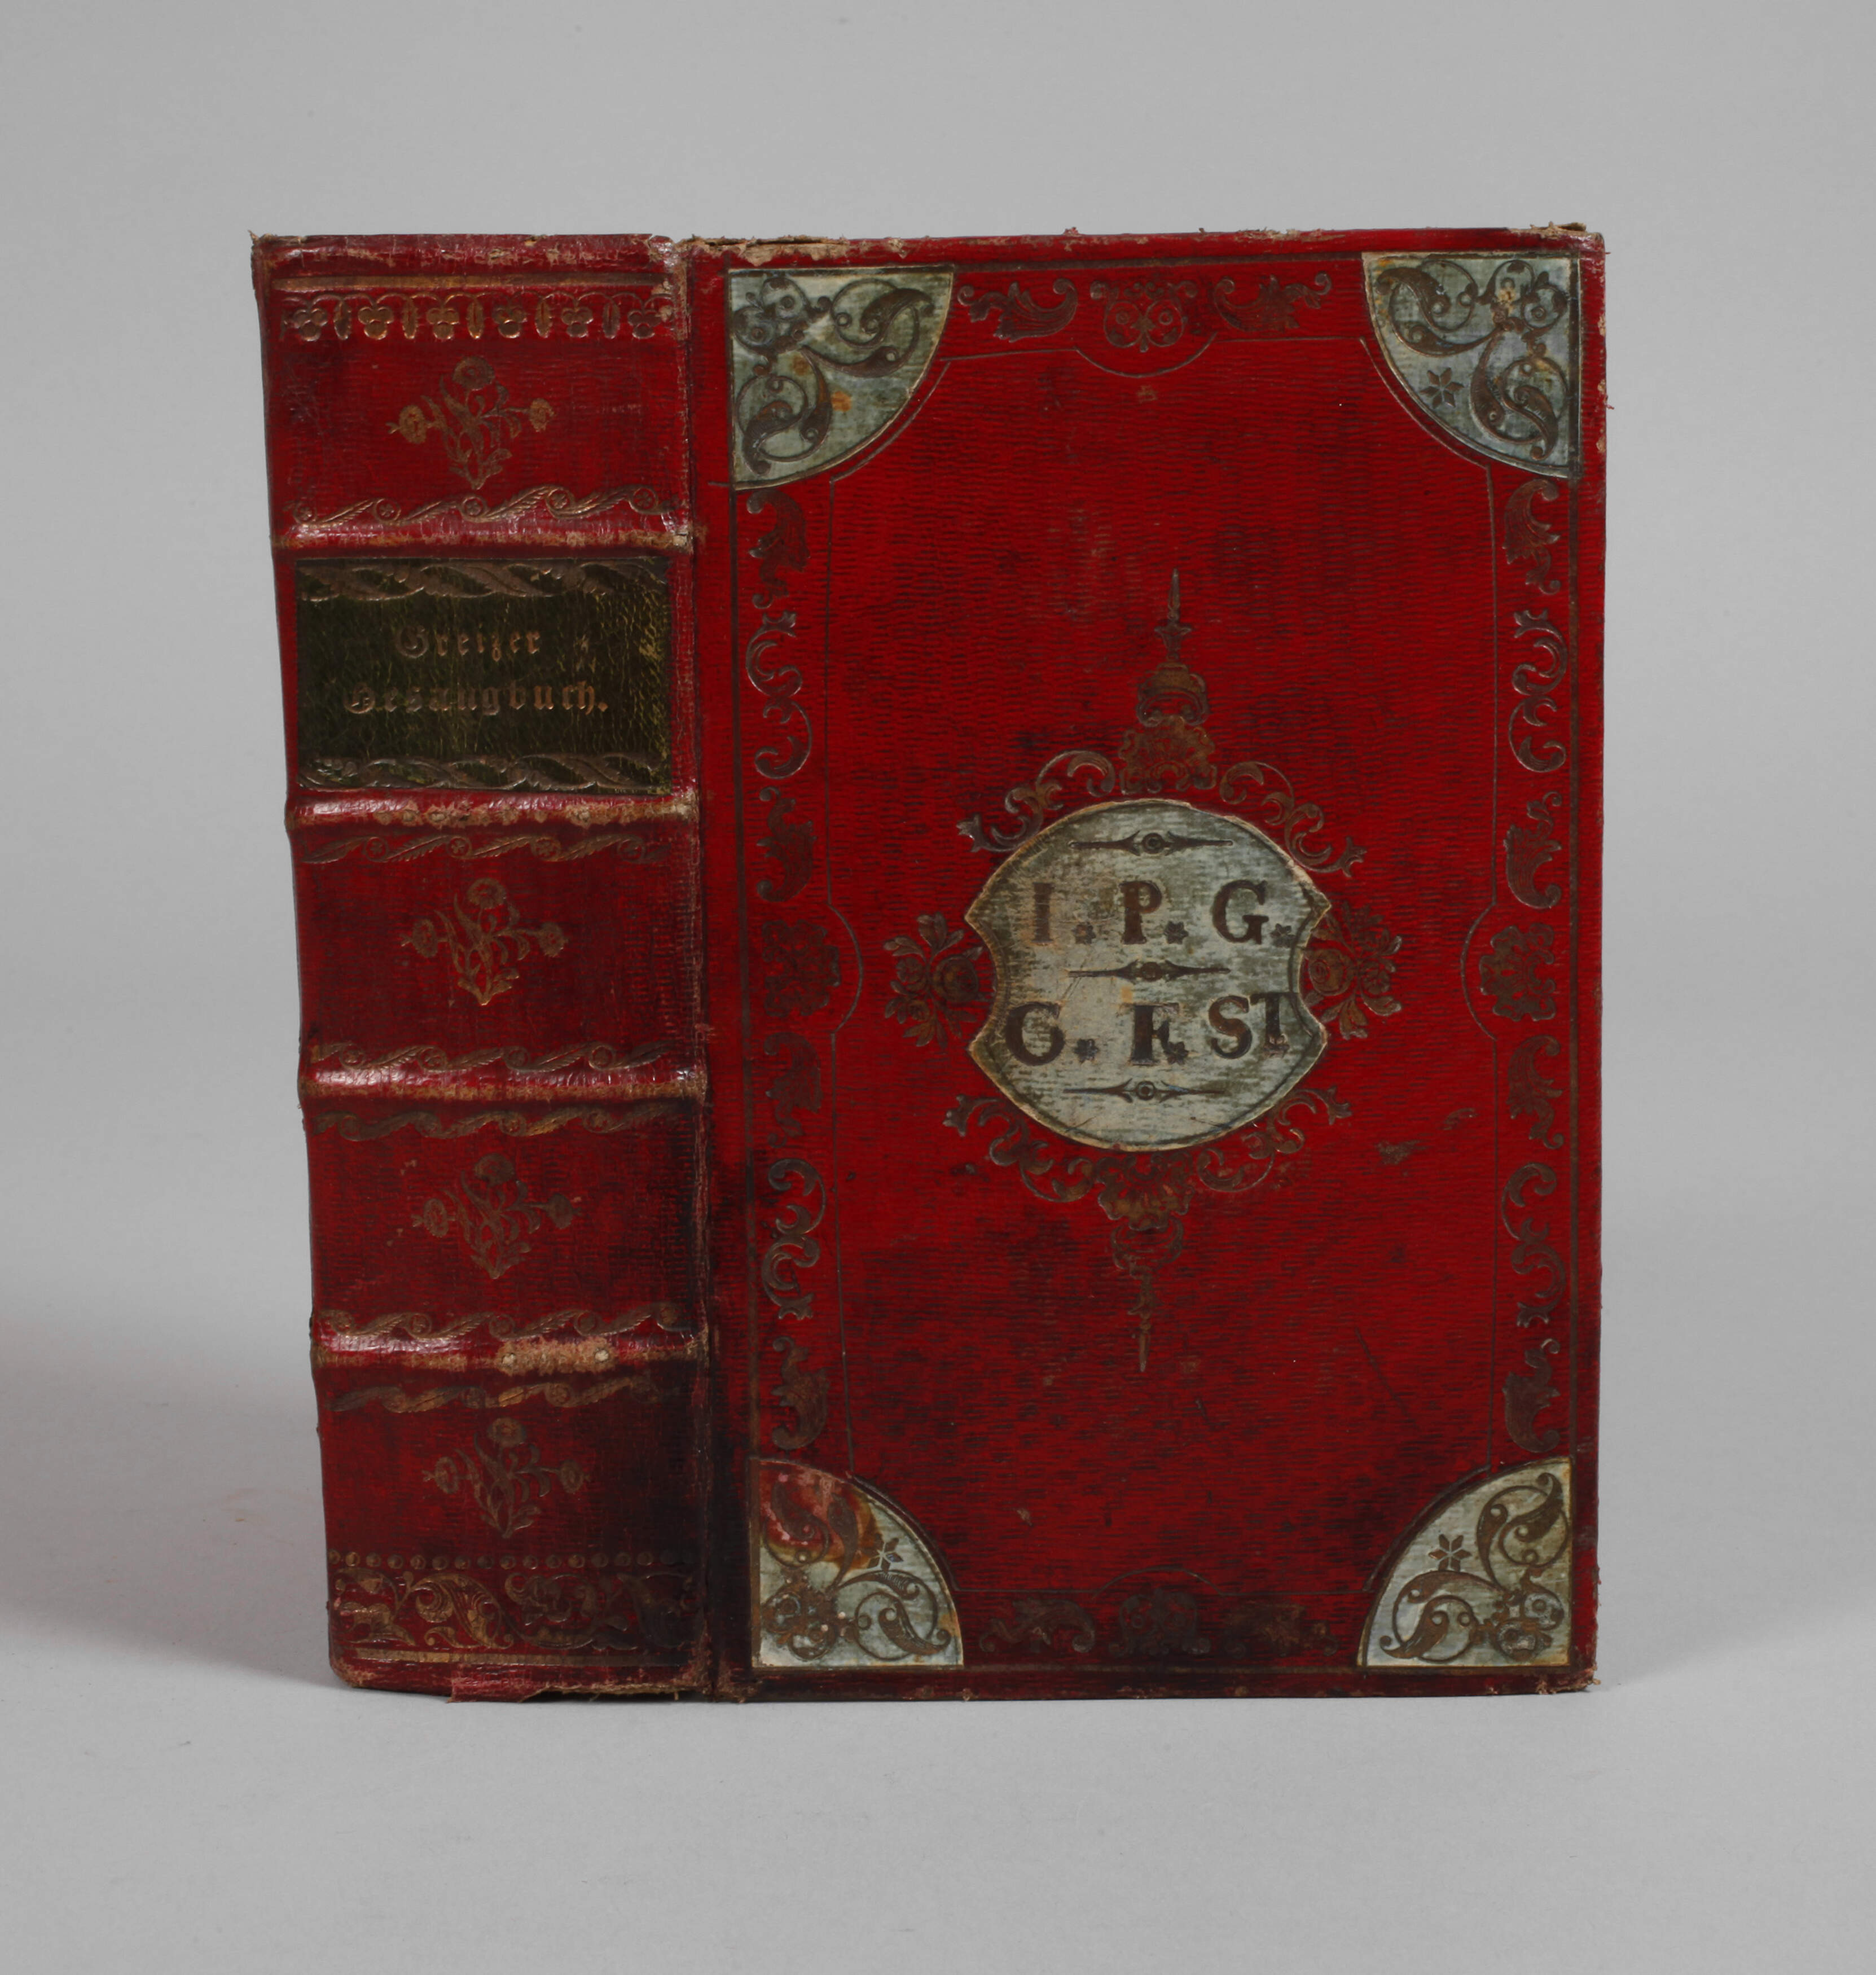 Greizer Gesangbuch 1841